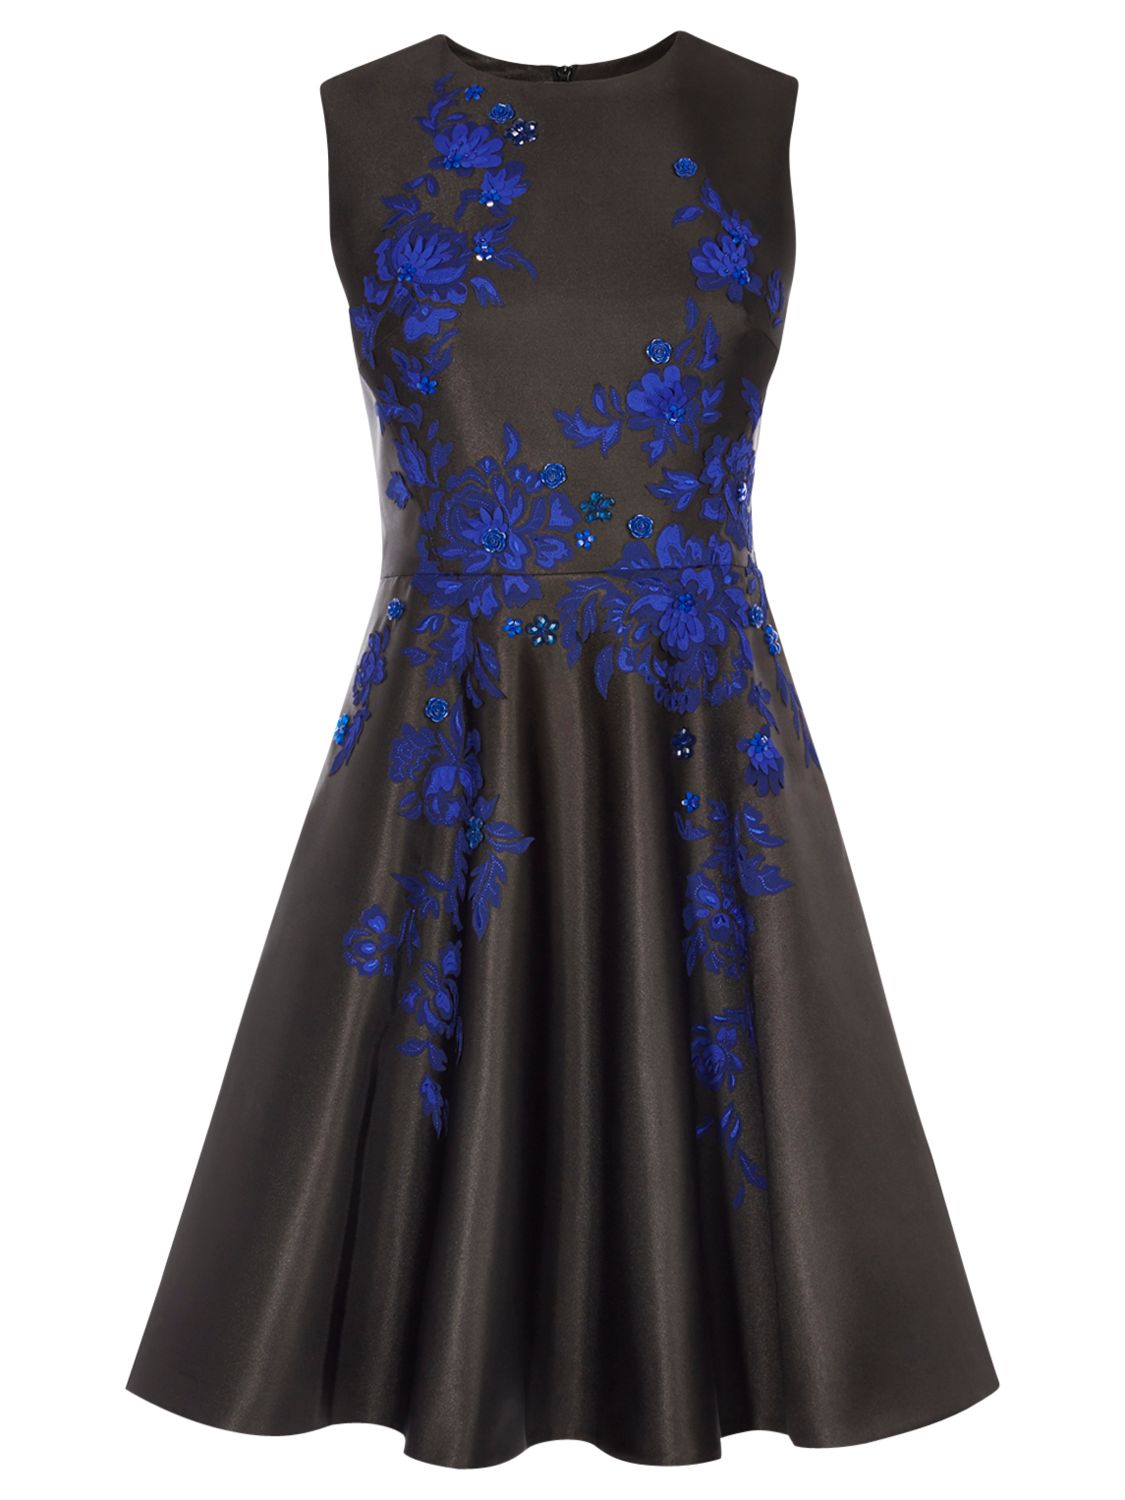 Karen Millen Applique Floral Dress, Black/Multi at John Lewis & Partners